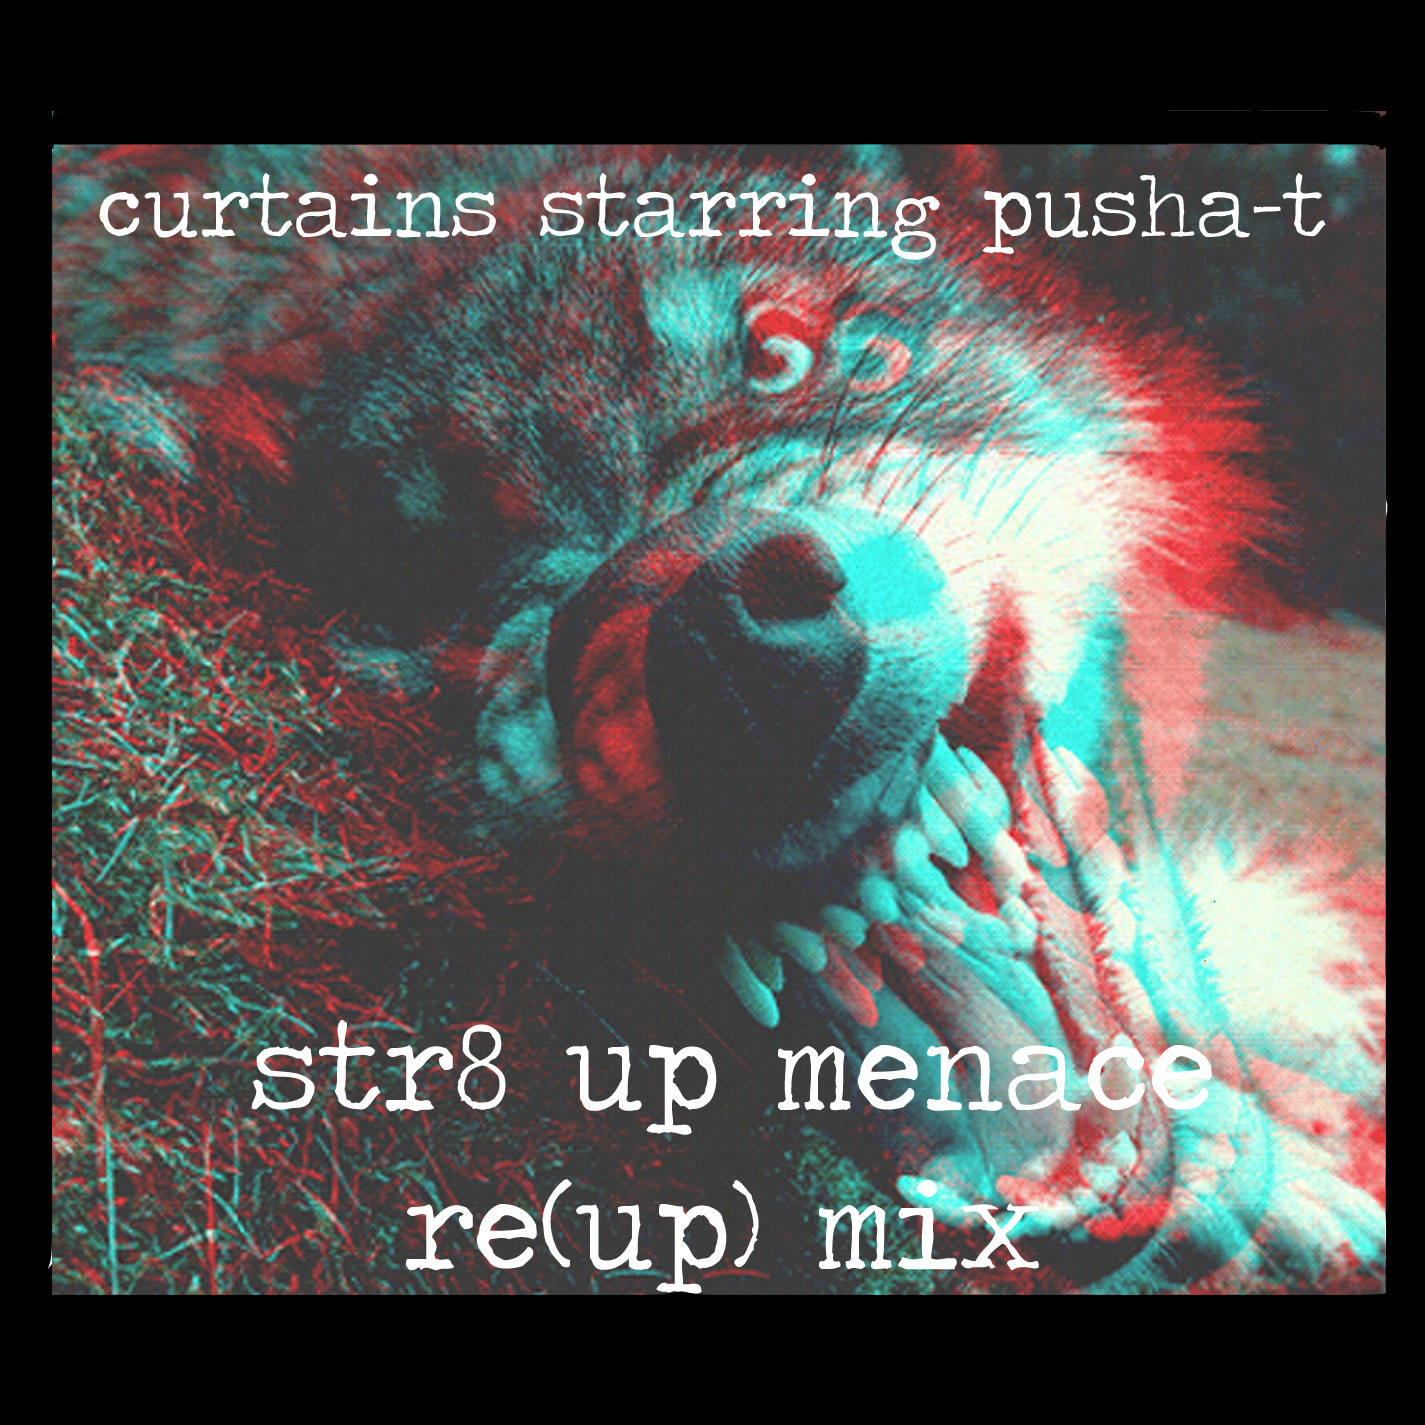 CurT@!n$ ft. Pusha T – str8 up menace (re(up) mix) (Audio)